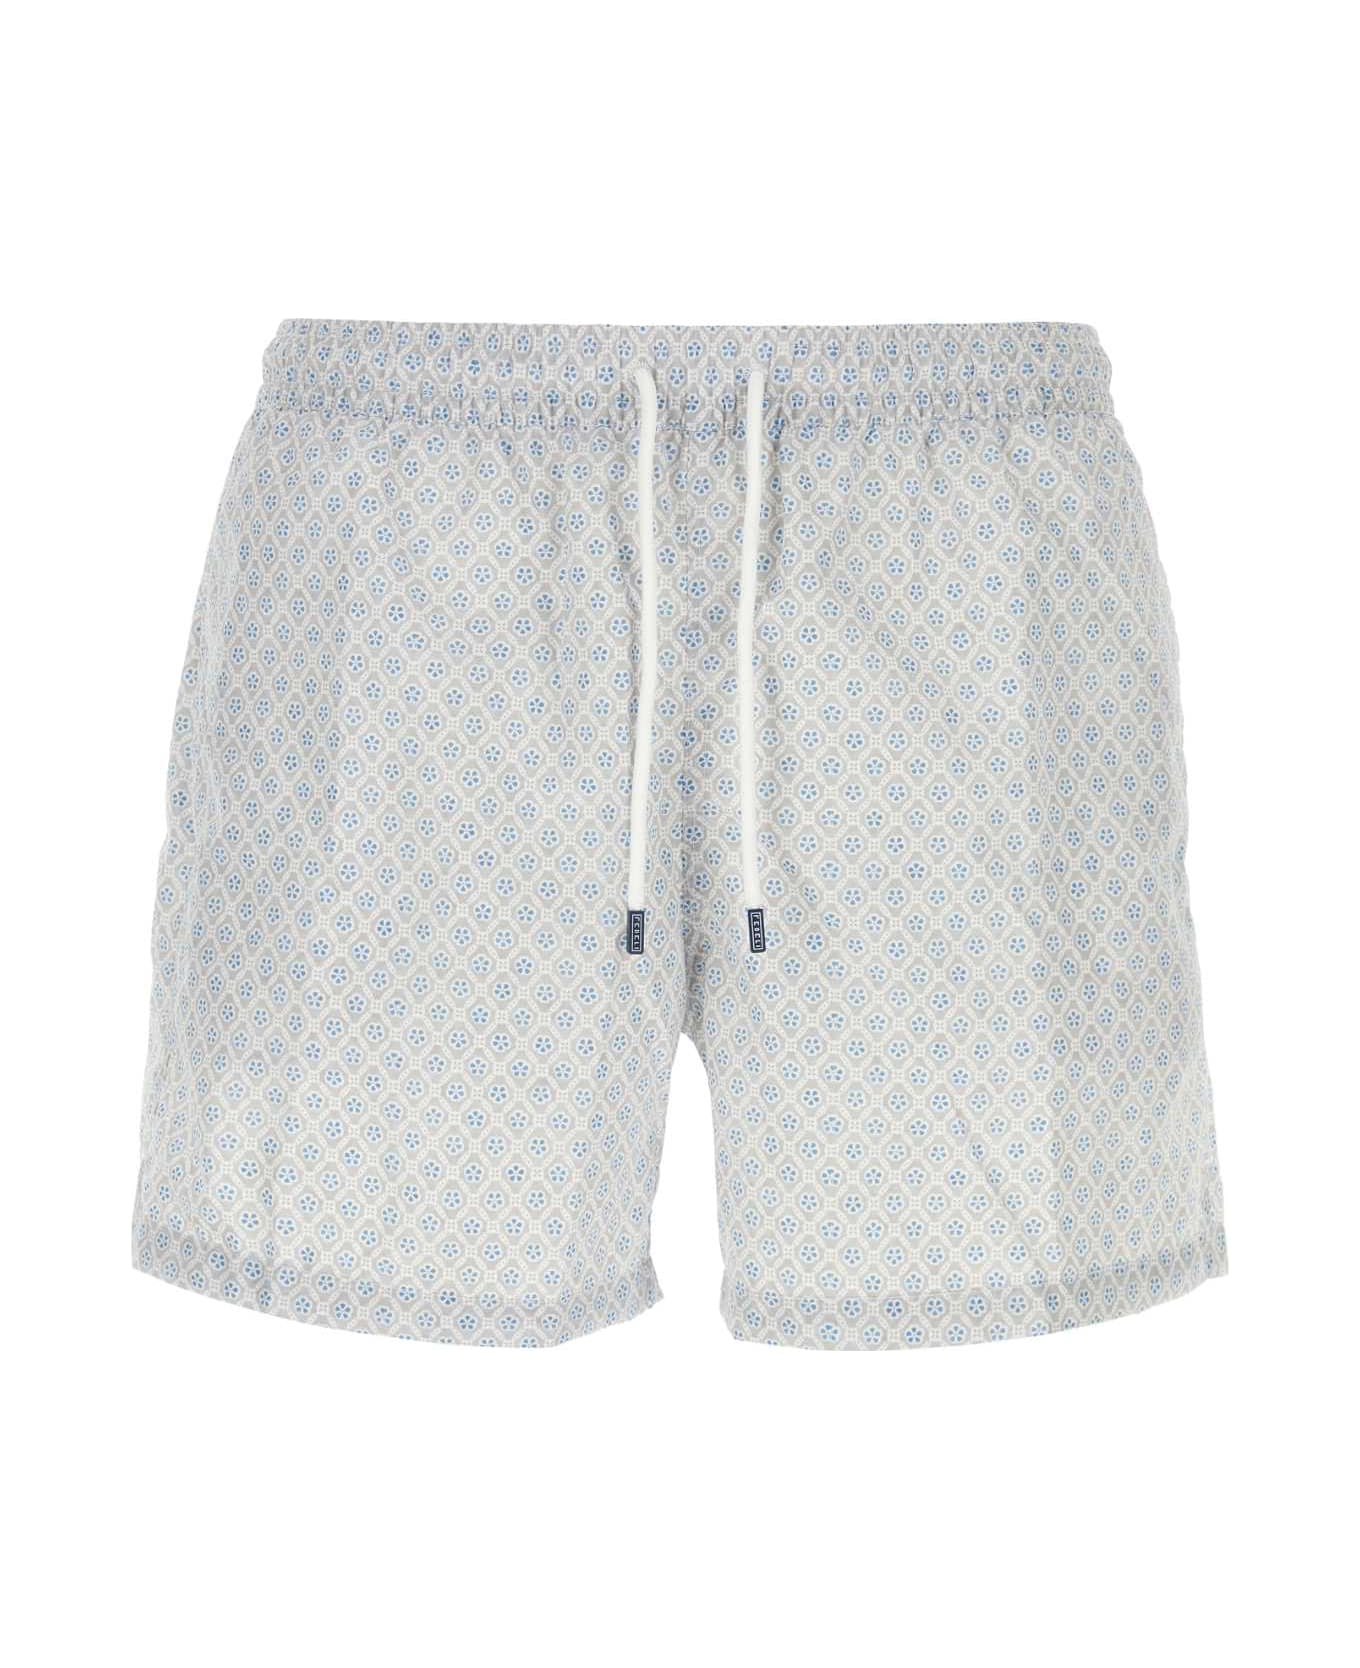 Fedeli Printed Polyester Swimming Shorts - FANTASIAAZZURRO